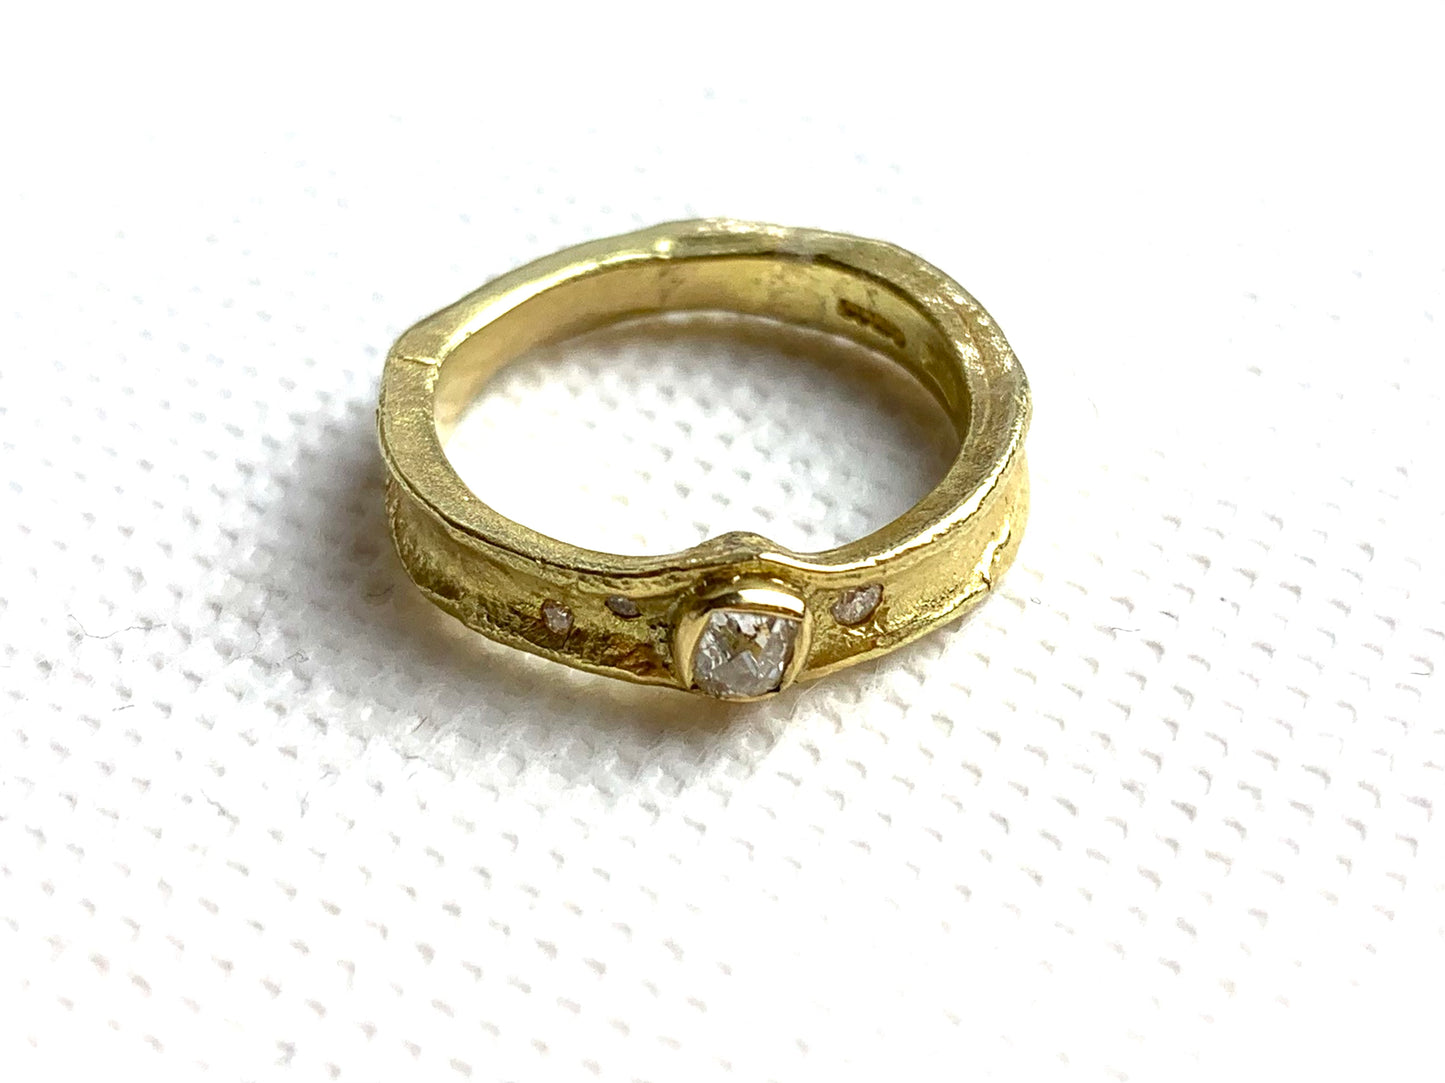 Palmer, Sarah - Diamond Yellow Gold Ring